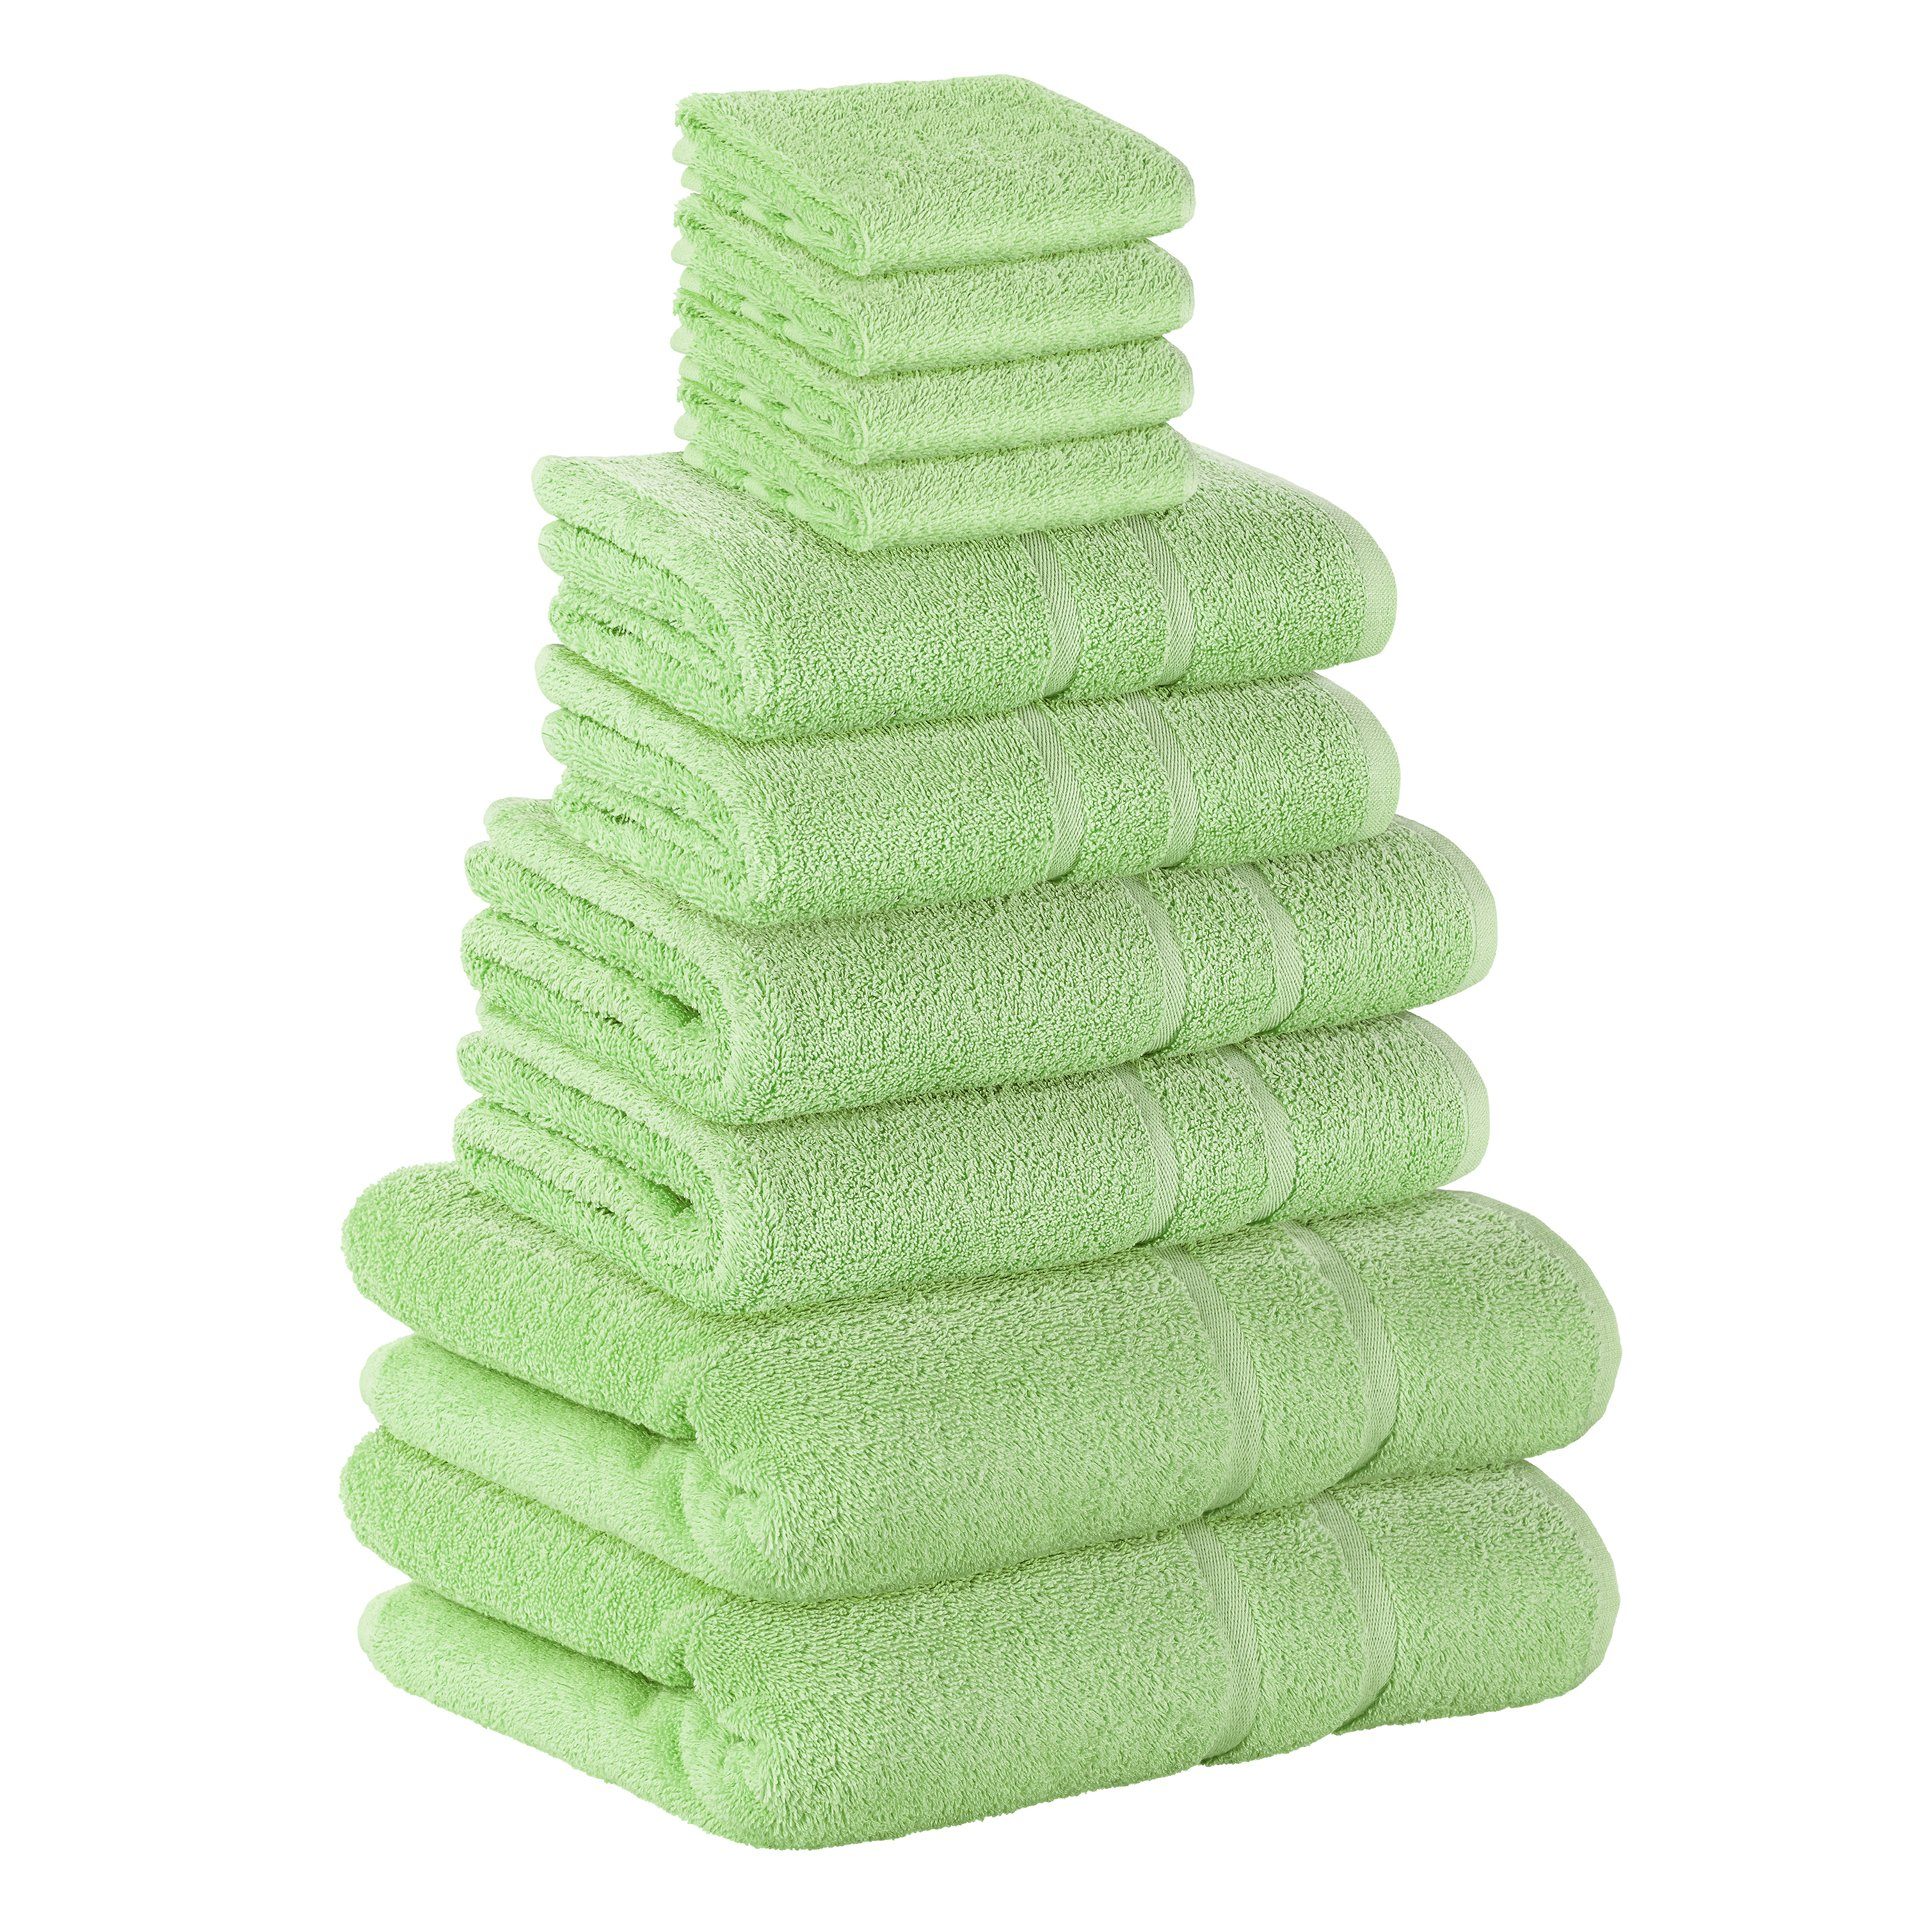 StickandShine Handtuch Set Gästehandtuch Baumwolle Frottee Pack, (12 Duschtücher Hellgrün Baumwolle als GSM 12er 500 2x 2x 500 4x GSM Teilig) 2x verschiedenen Handtücher Badetücher (Spar-set), Farben SET in 100% 100% Handtuch